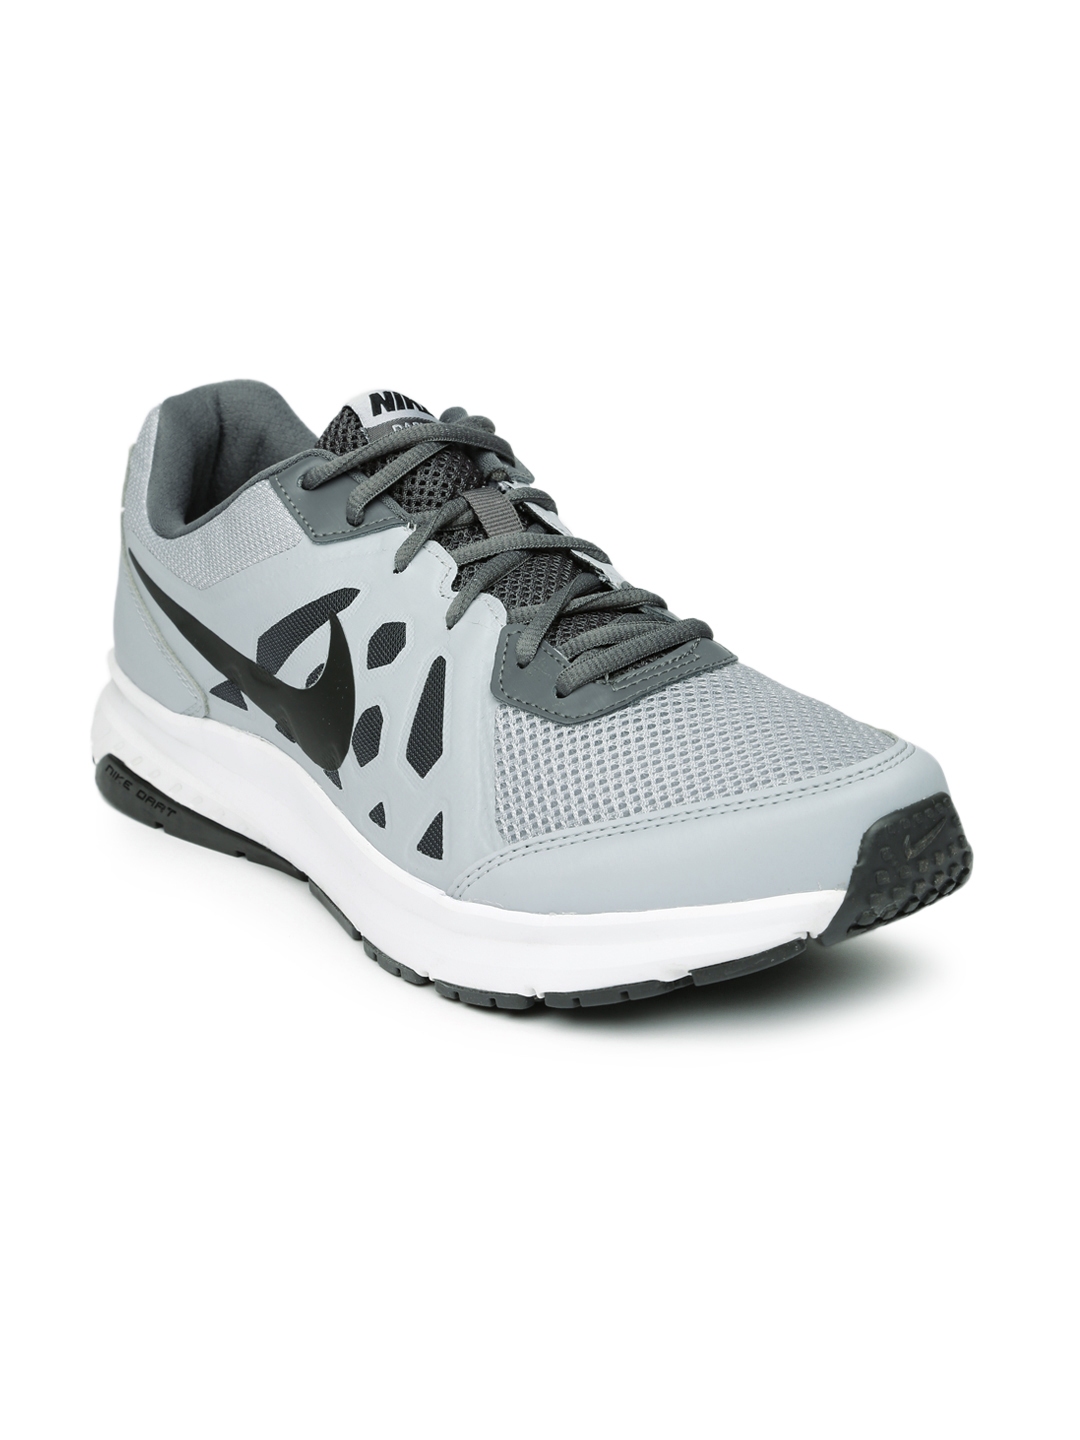 Buy Nike Grey Dart MSL Running Shoes - Sports for Men 1109894 |